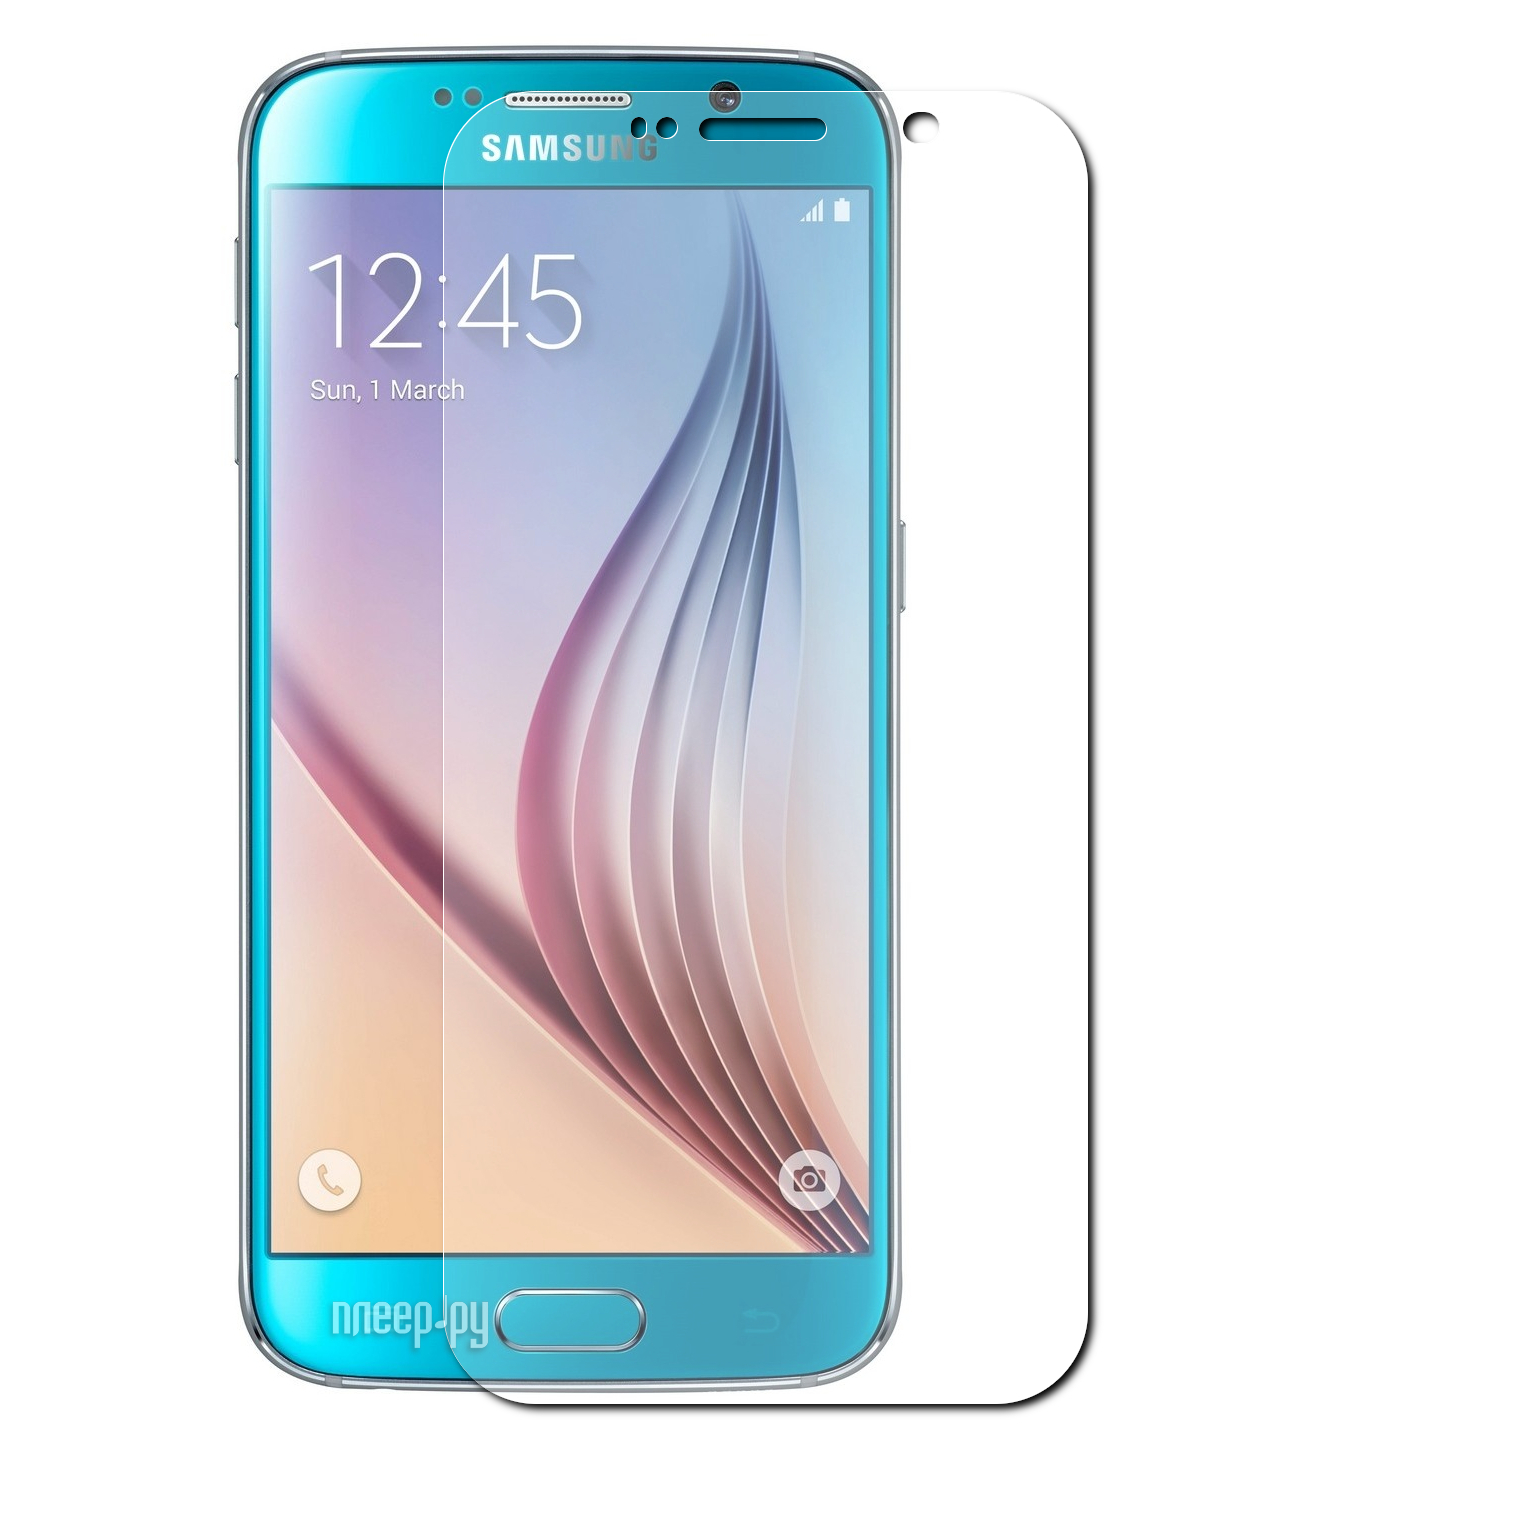    Samsung SM-G920F Galaxy S6 Krutoff Group  21923 